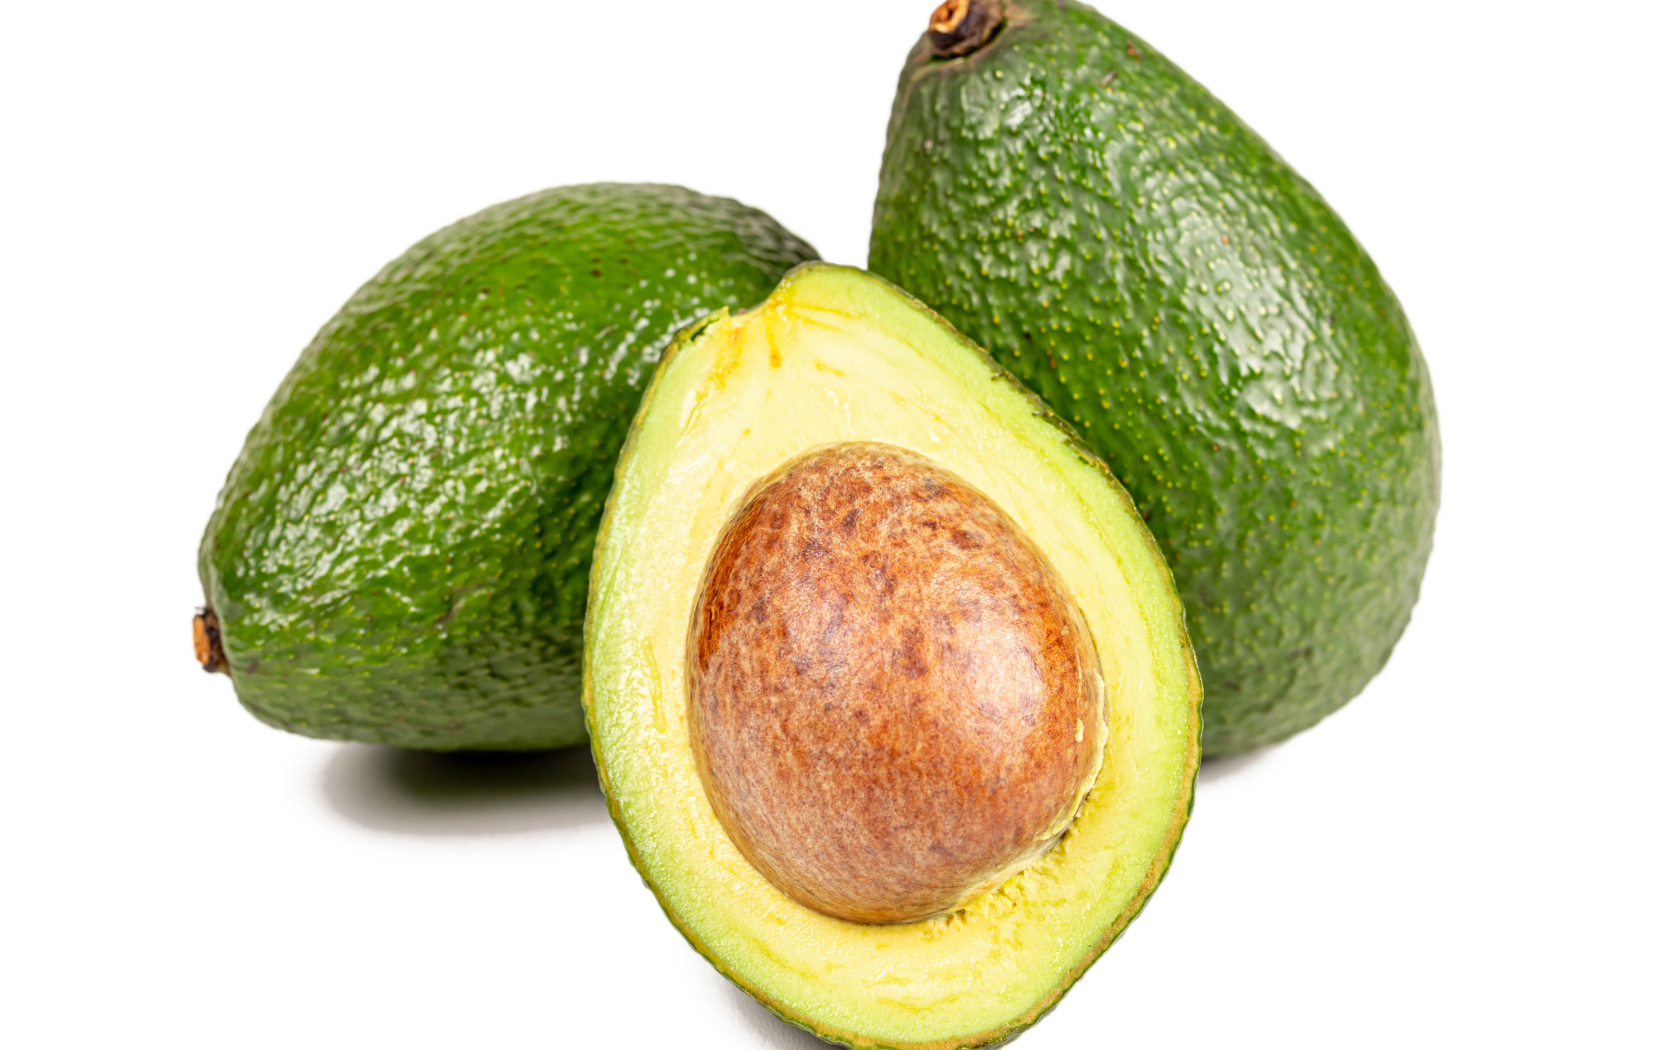 Green avocado fruit on white background